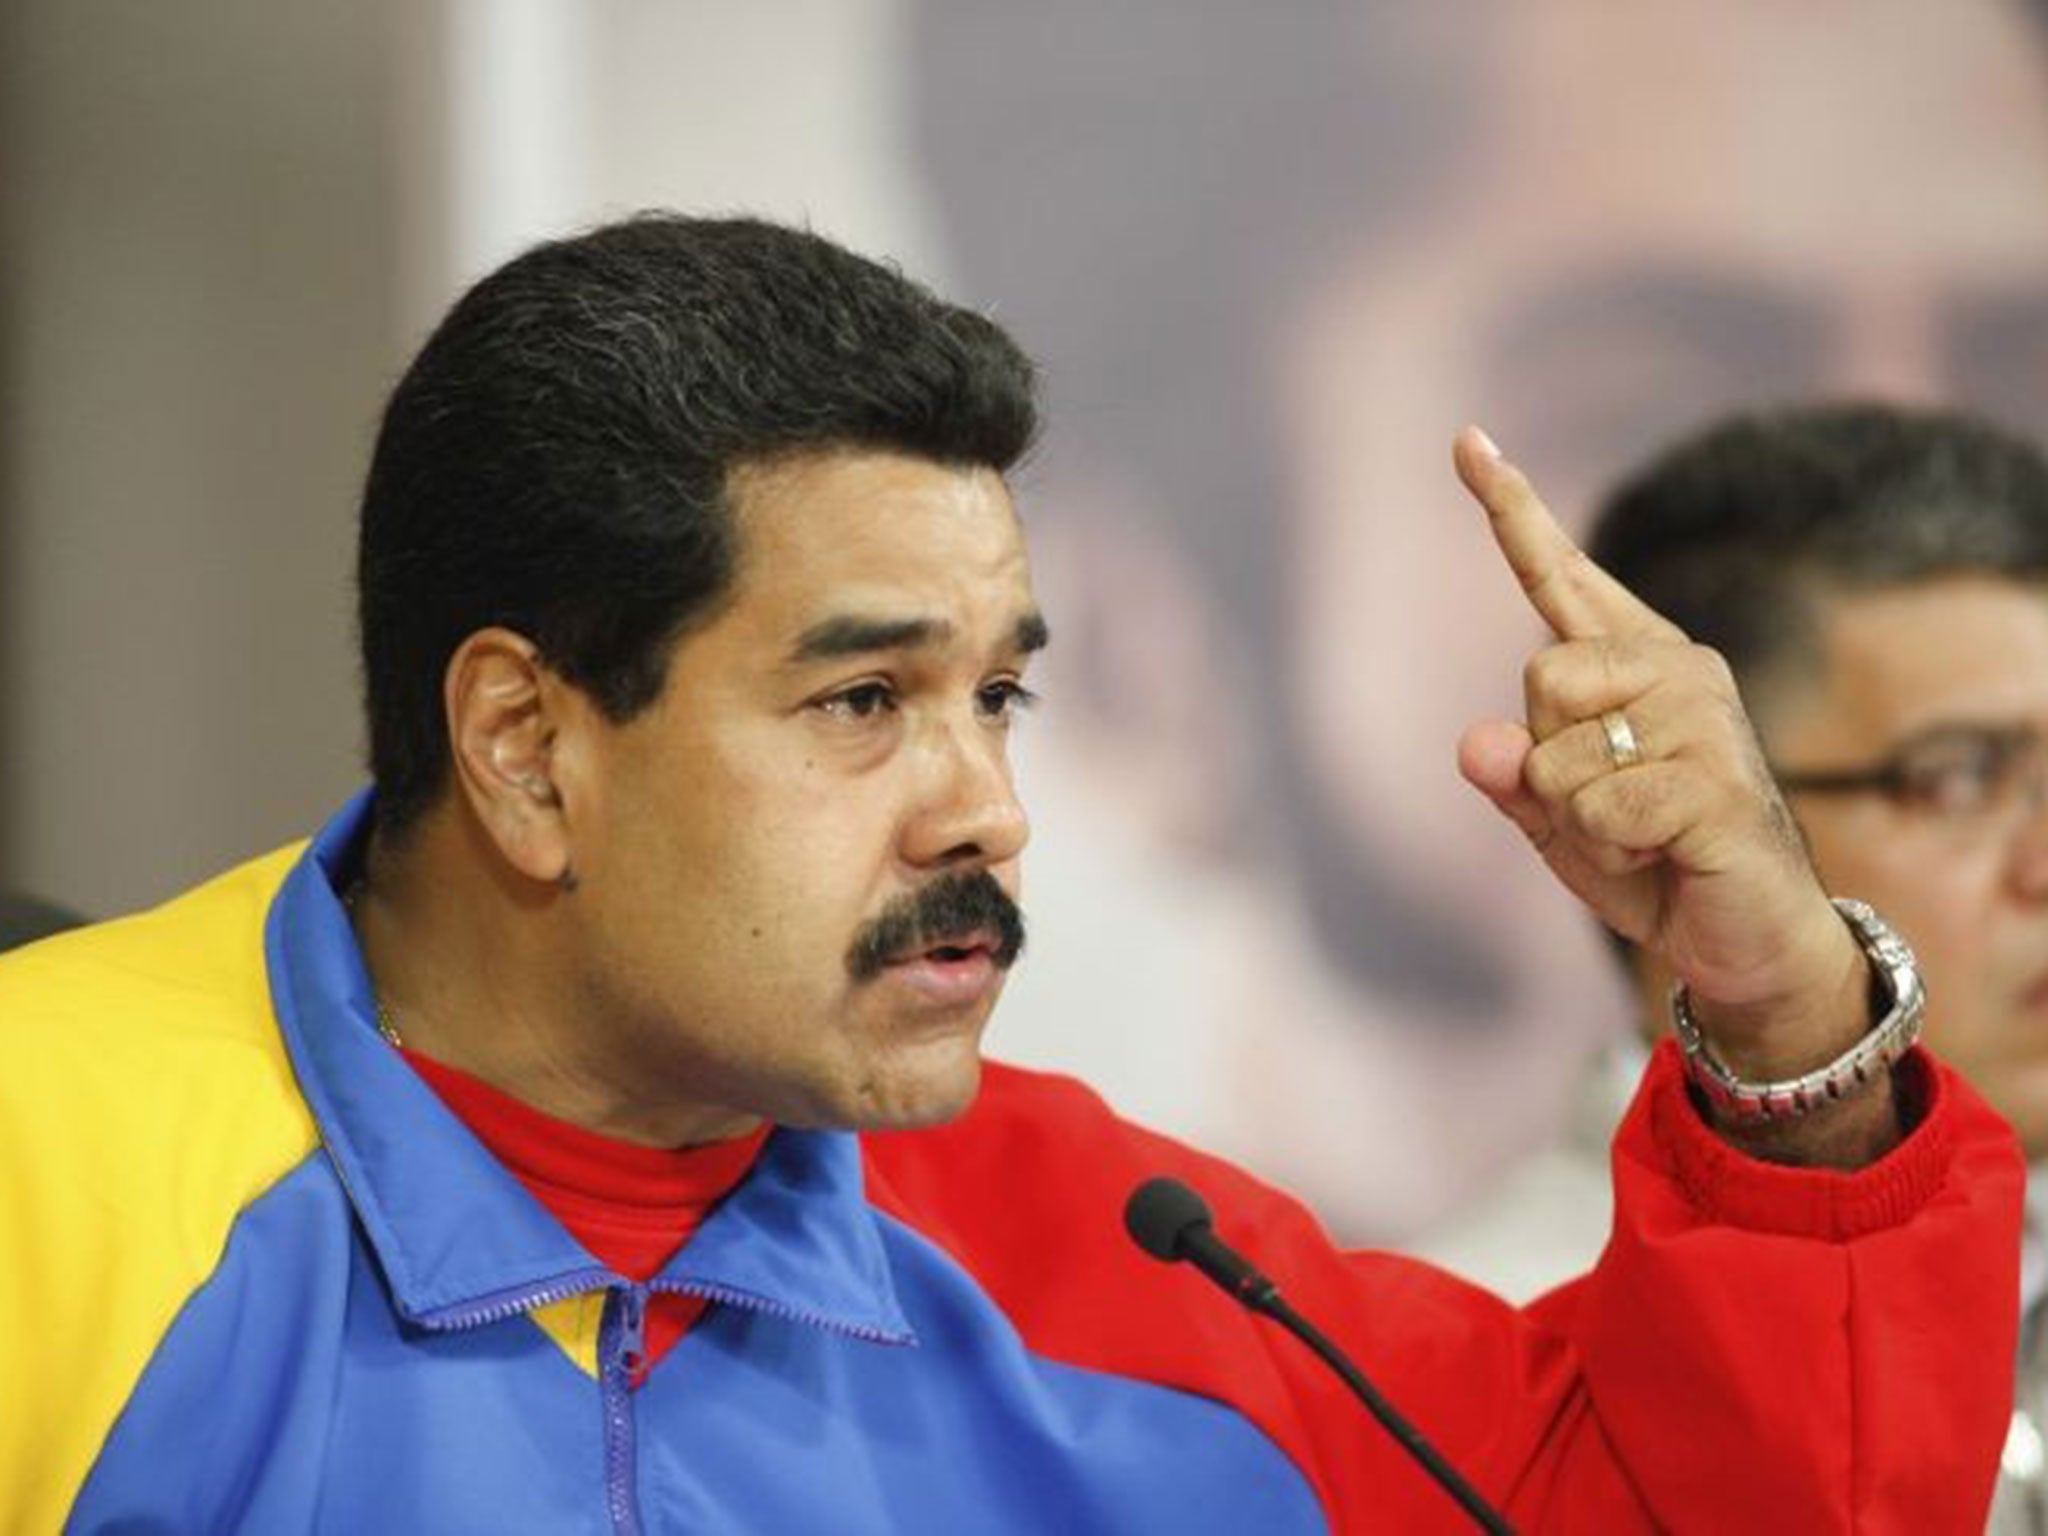 The Venezuelan president Nicolas Maduro